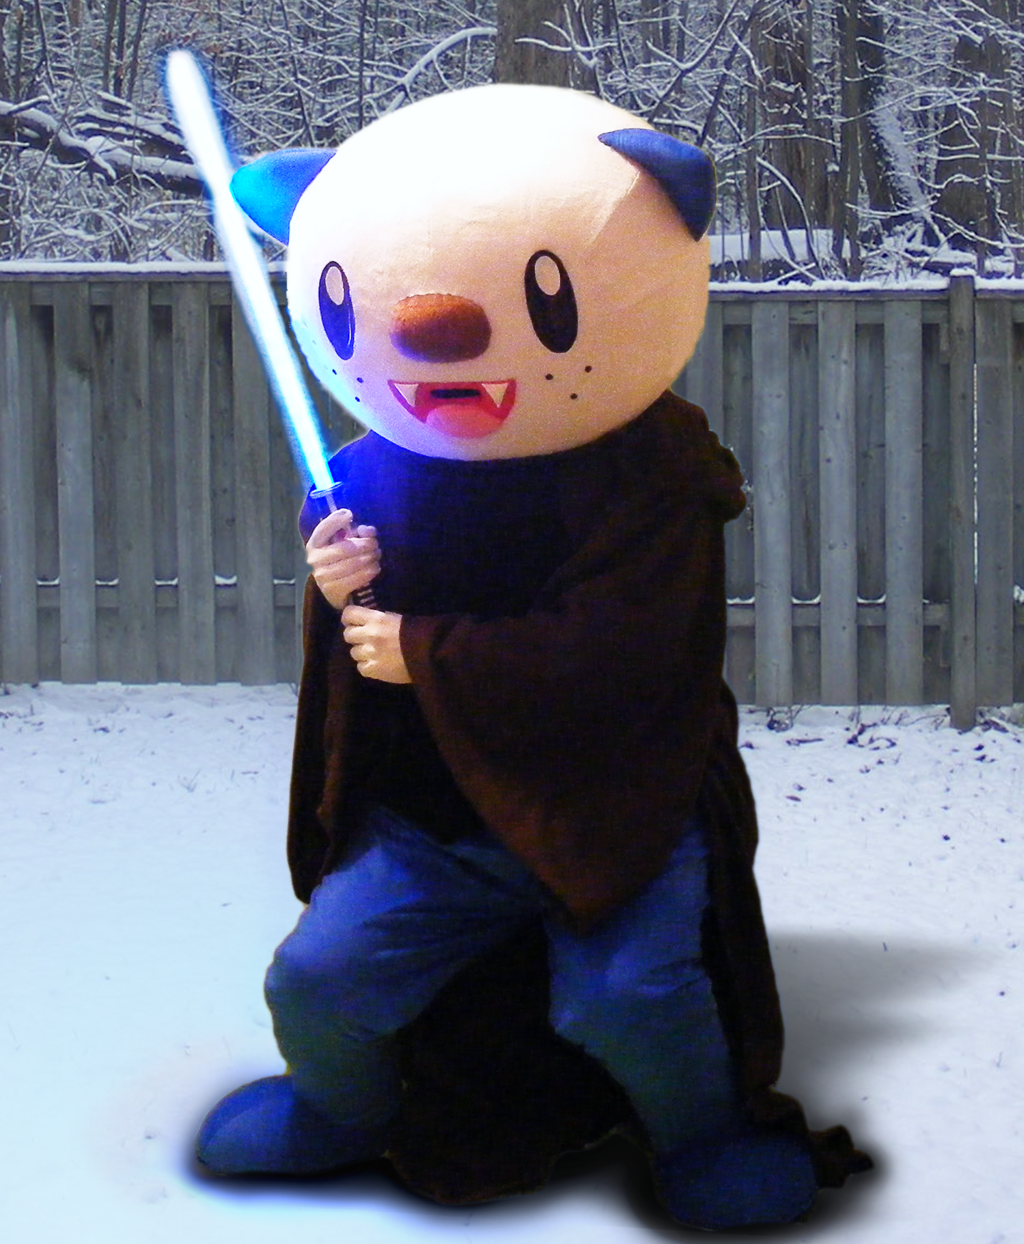 Jedi Master Oshawott Training in the Snow (Fursuiting Photo)